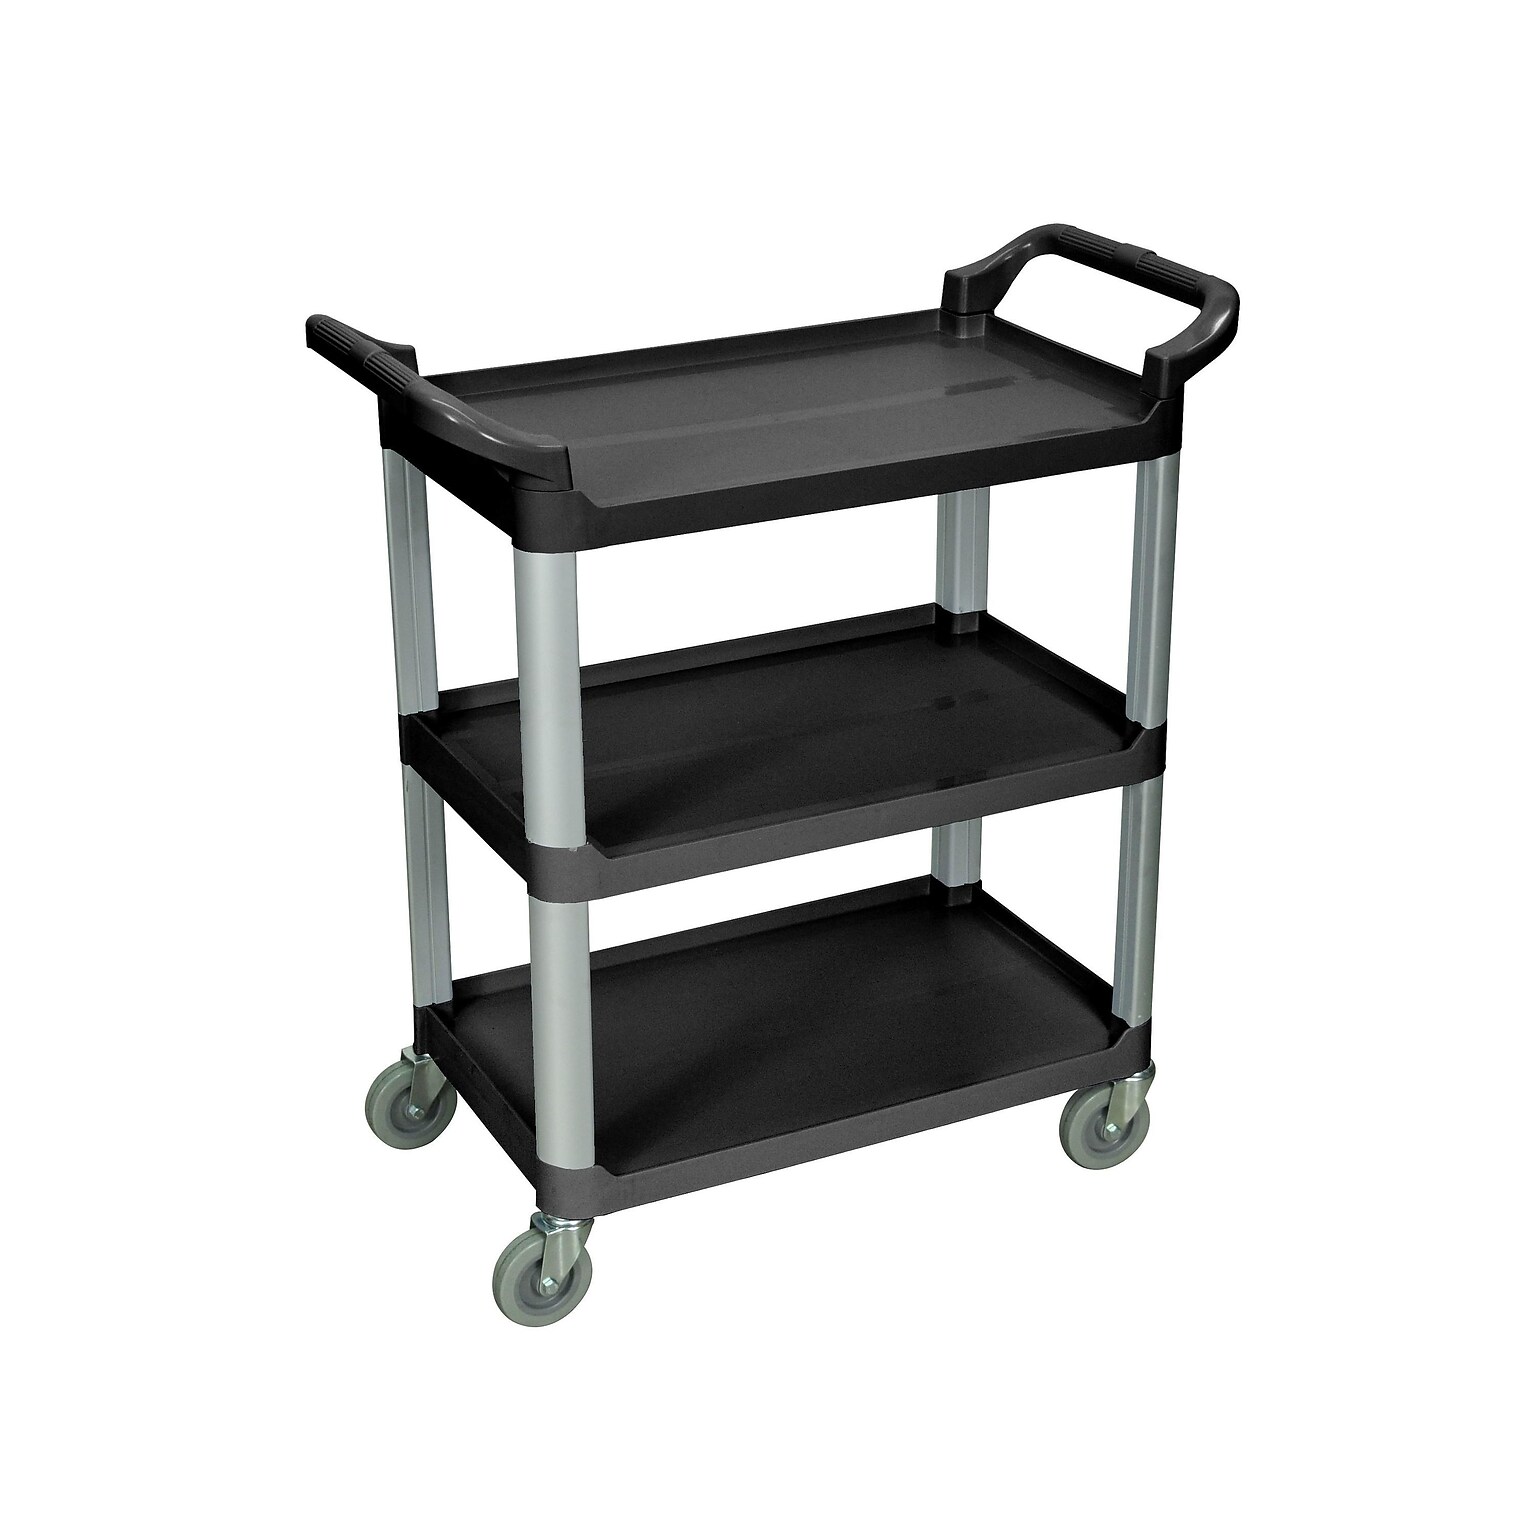 Luxor 3-Shelf Mixed Materials Mobile Serving Cart with Swivel Wheels, Black (SC12-B)